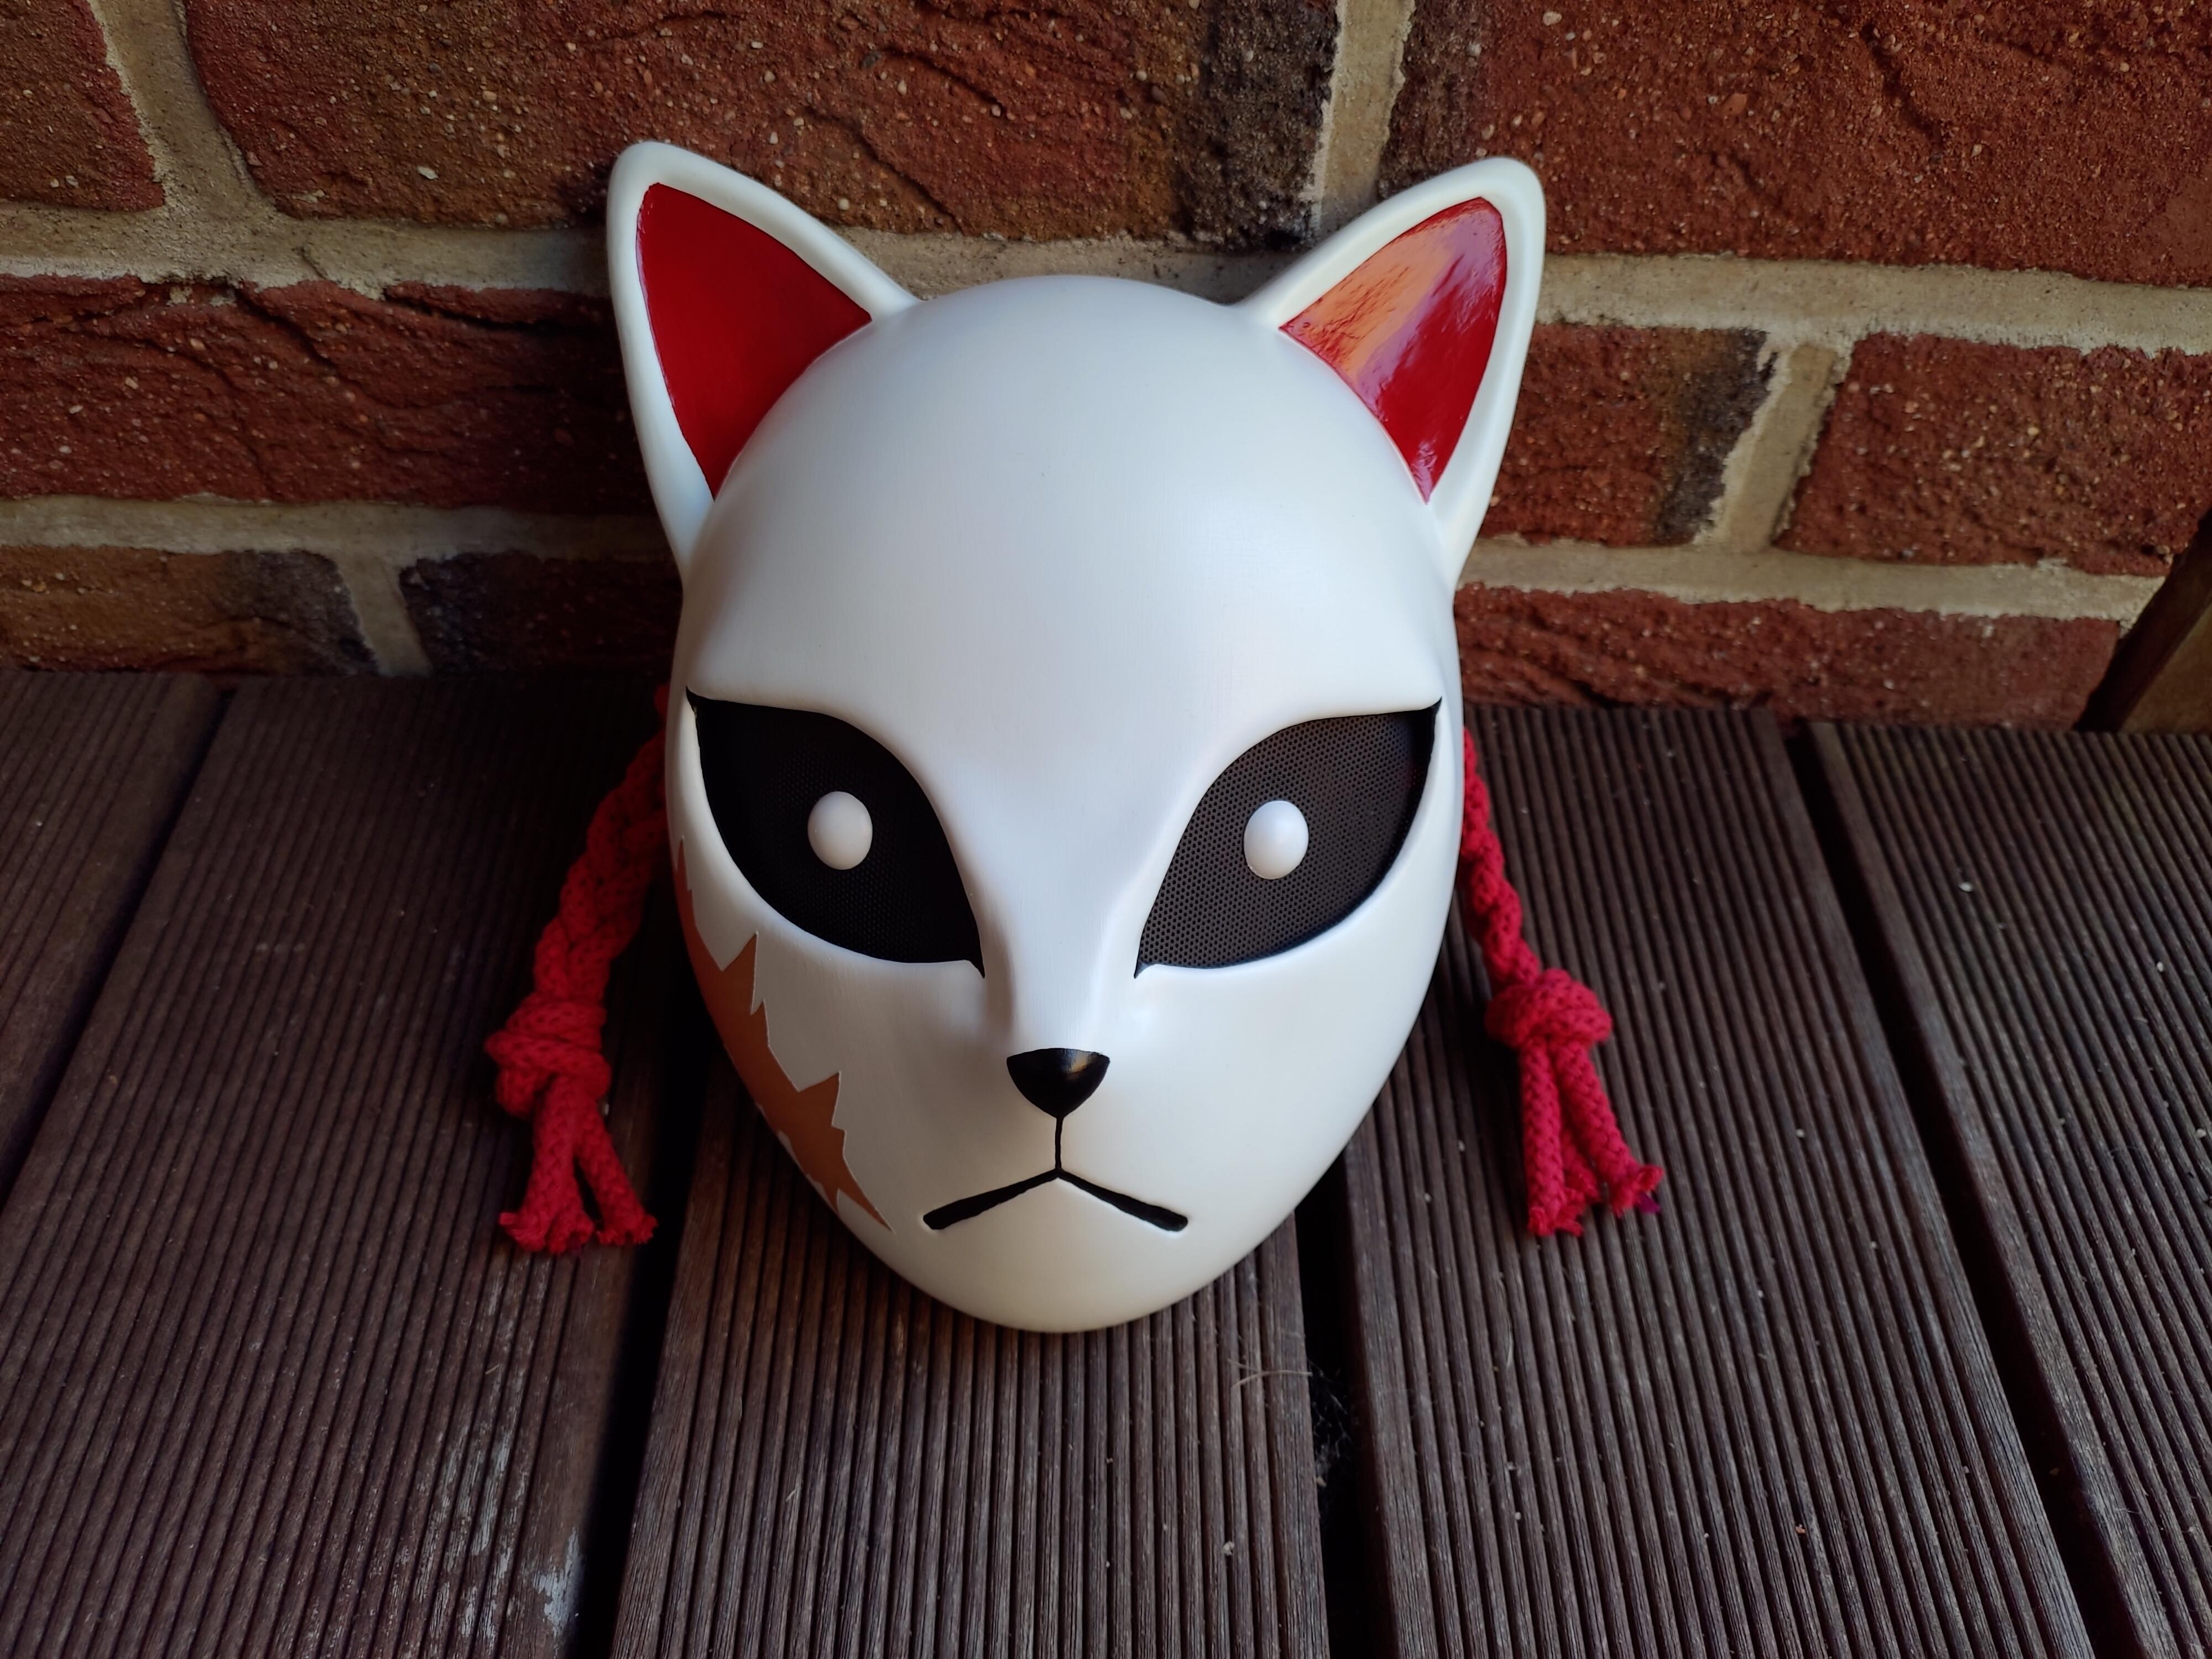 Sabito's Fox Mask from Kimetsu no Yaiba